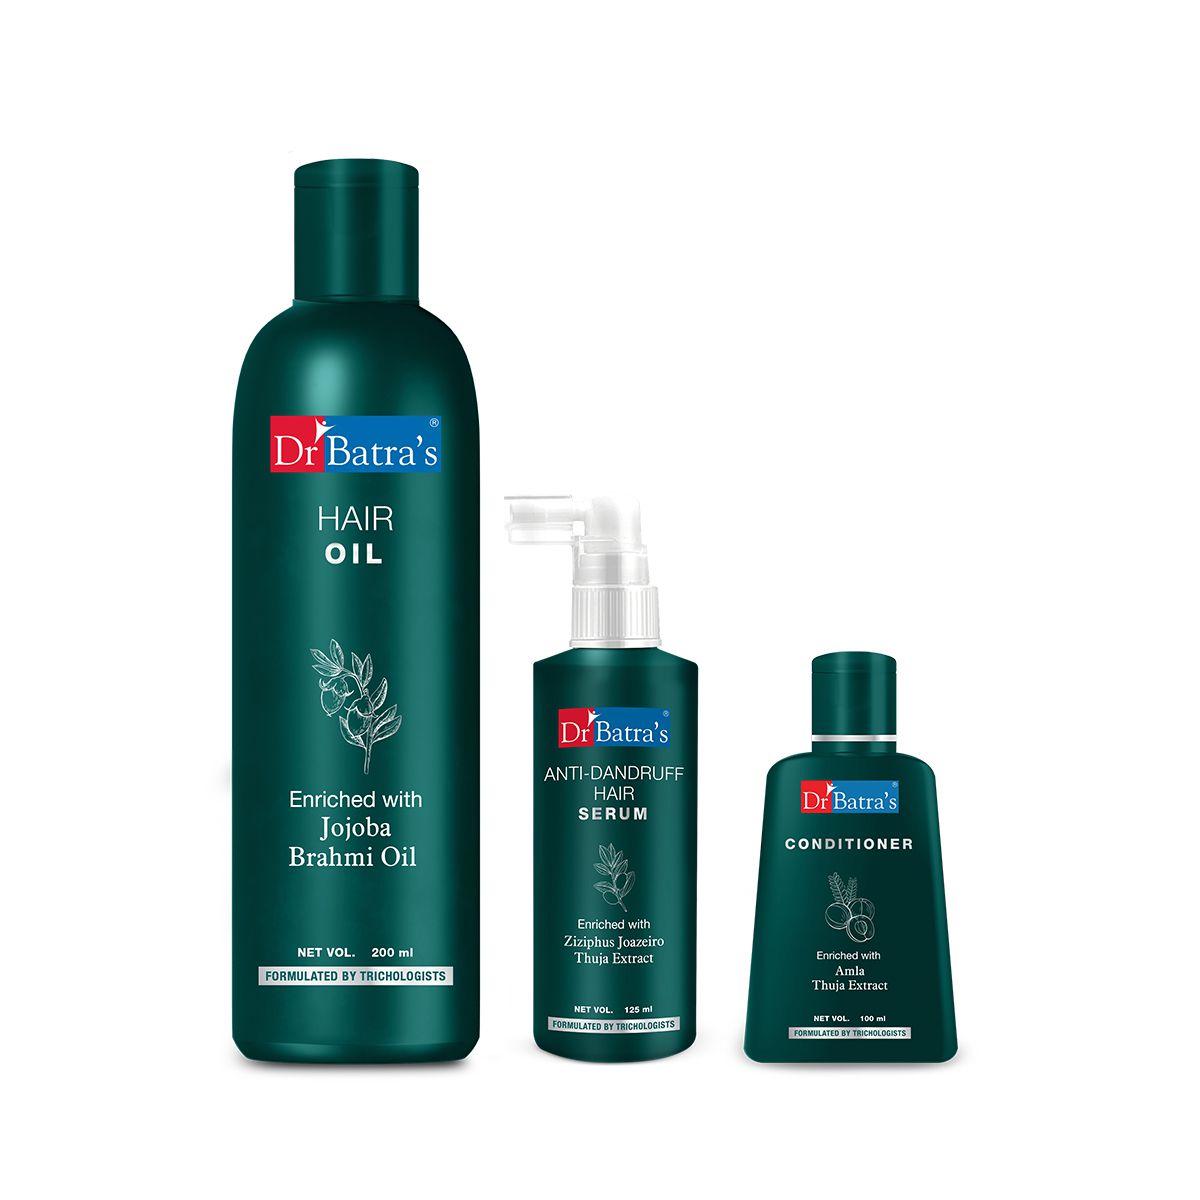     			Dr Batra's Anti Dandruff Hair Serum, Conditioner - 100 ml and Hair Oil - 200 ml (Pack of 3)